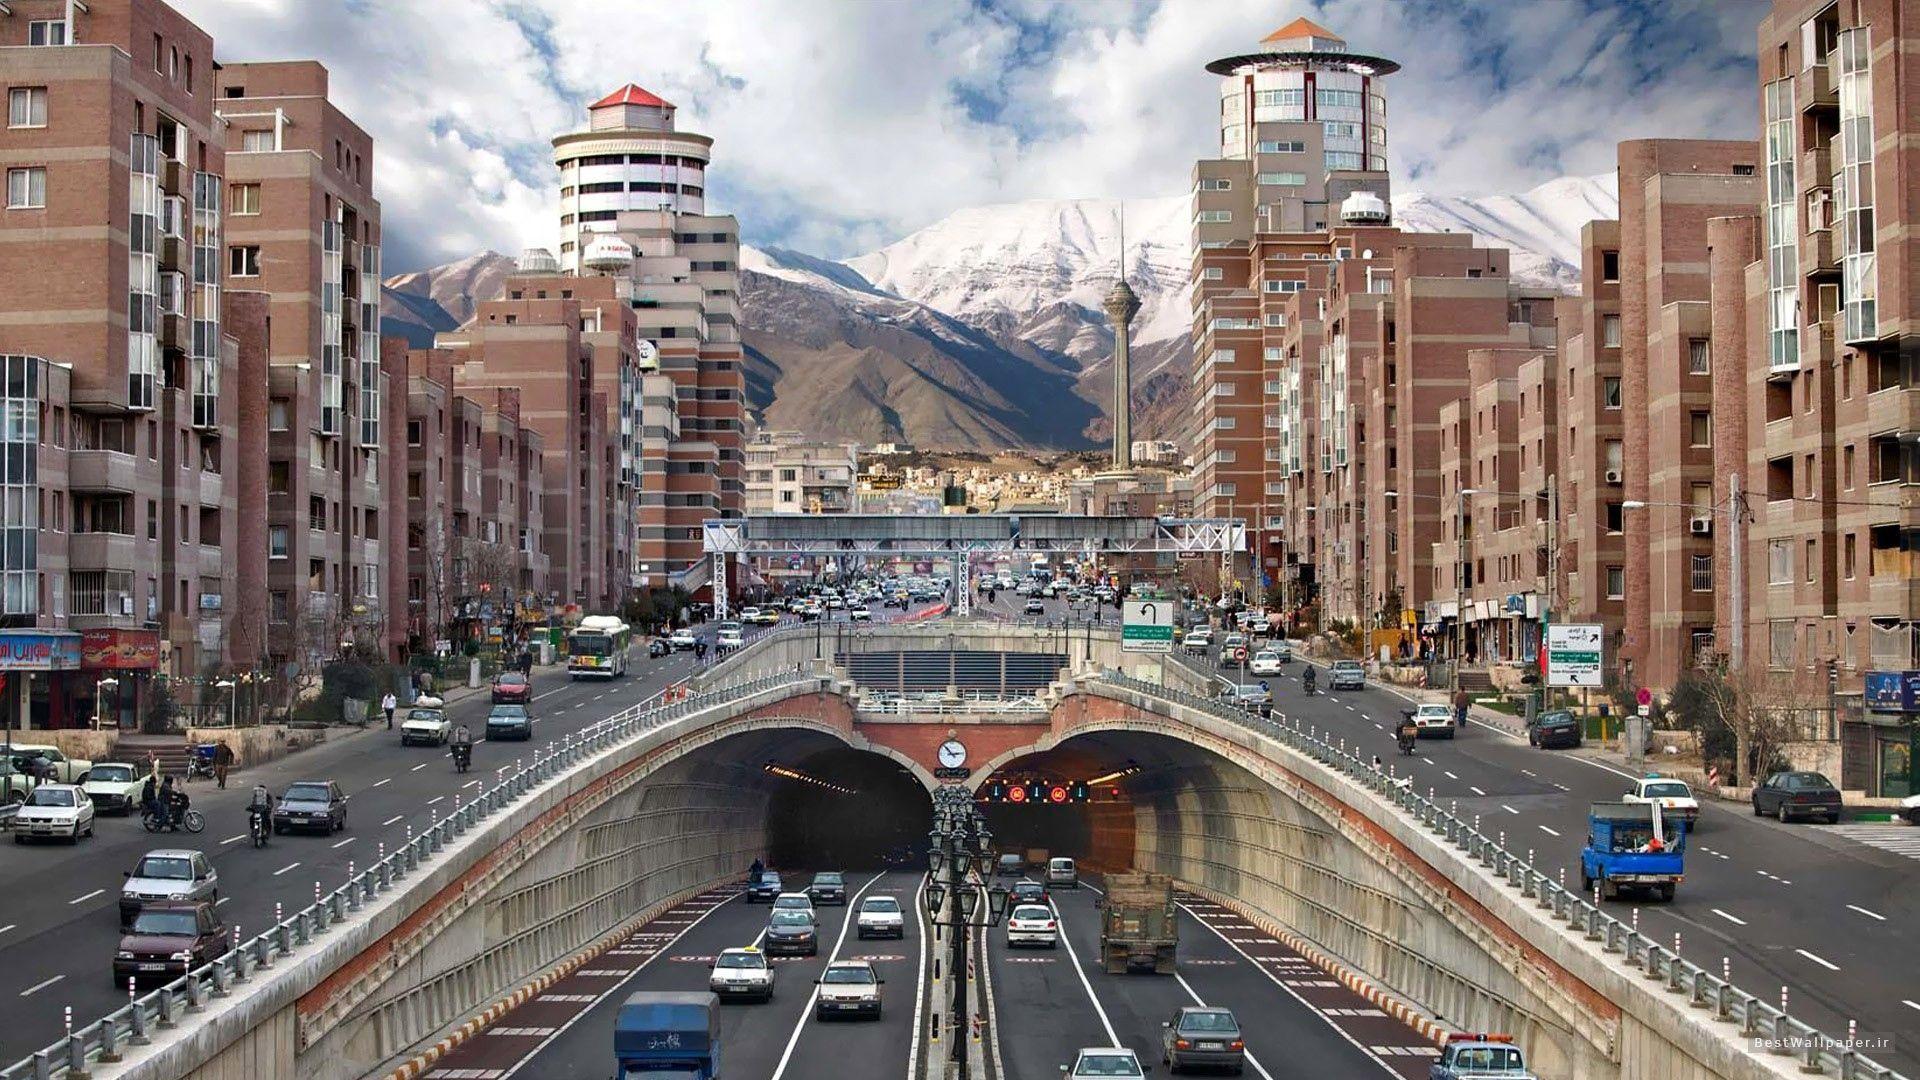 Download wallpaper 1920x1080 iran, tehran, road, building HD background